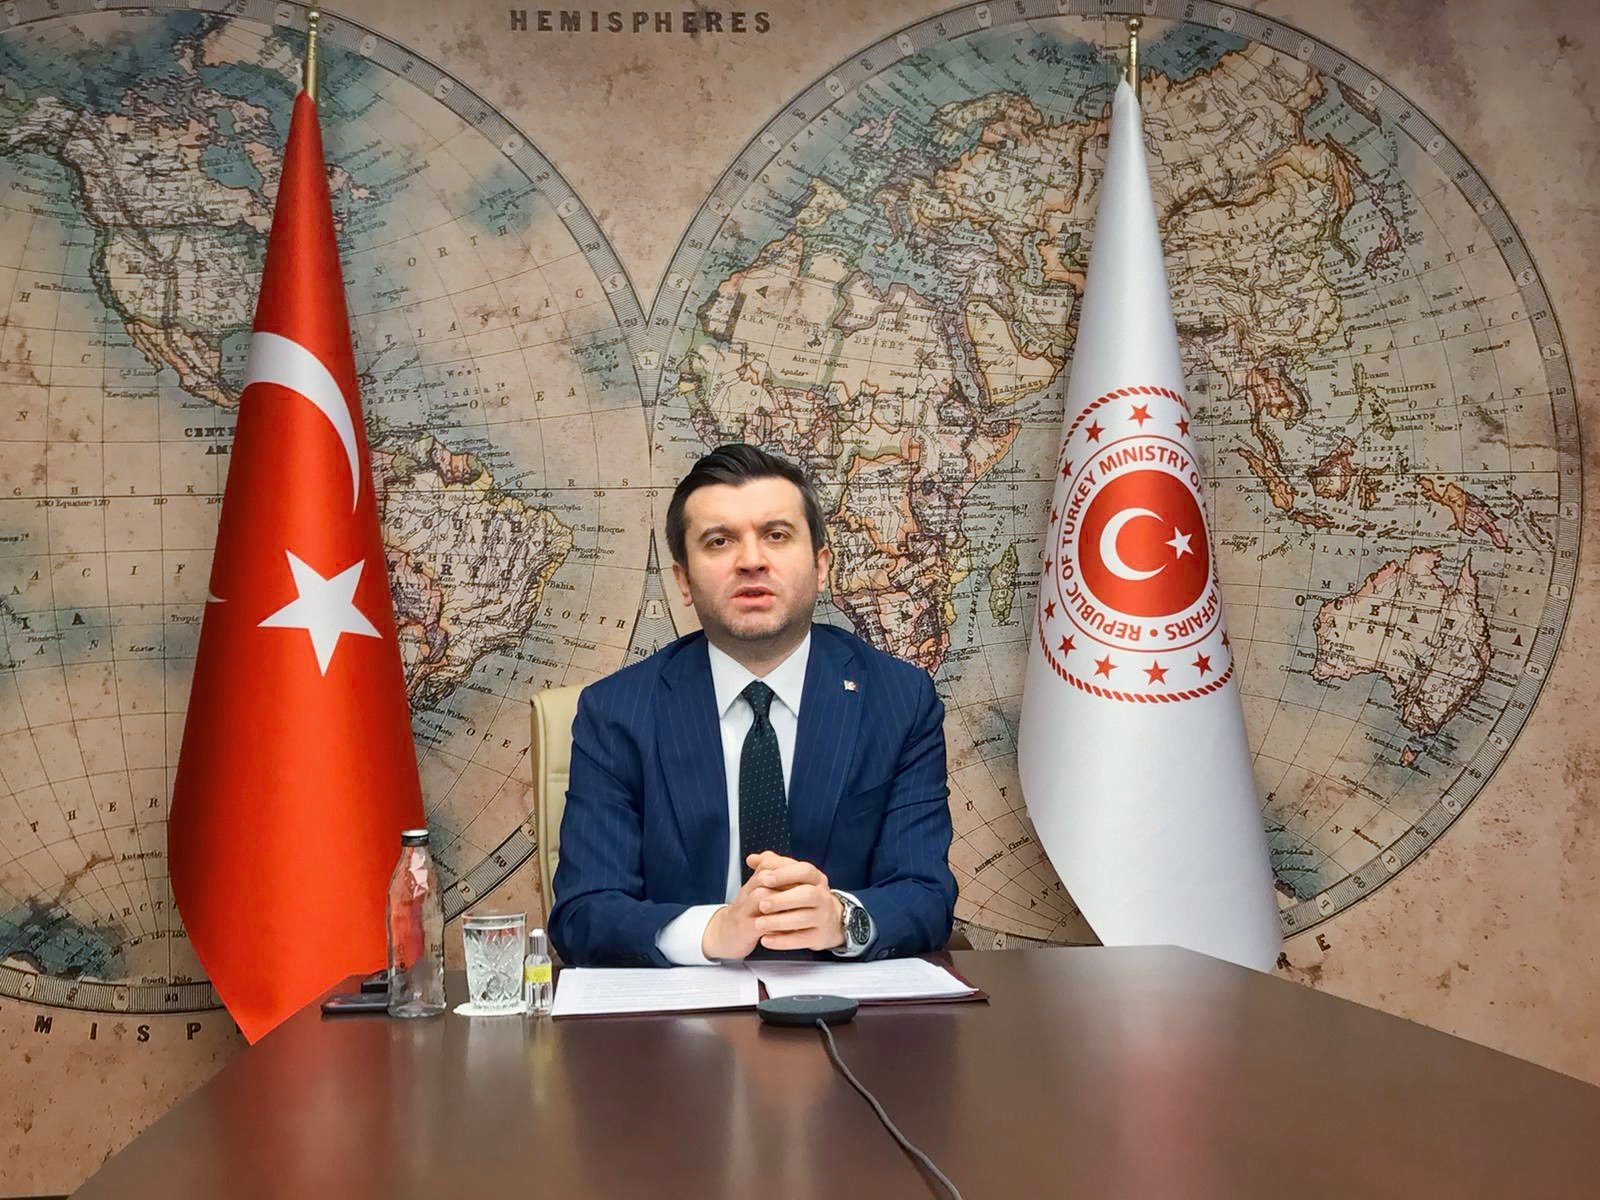 Deputy Foreign Minister Yavuz Selim Kıran speaks during a videoconference call in the capital Ankara, Turkey, Feb. 23, 2021. (DHA Photo)